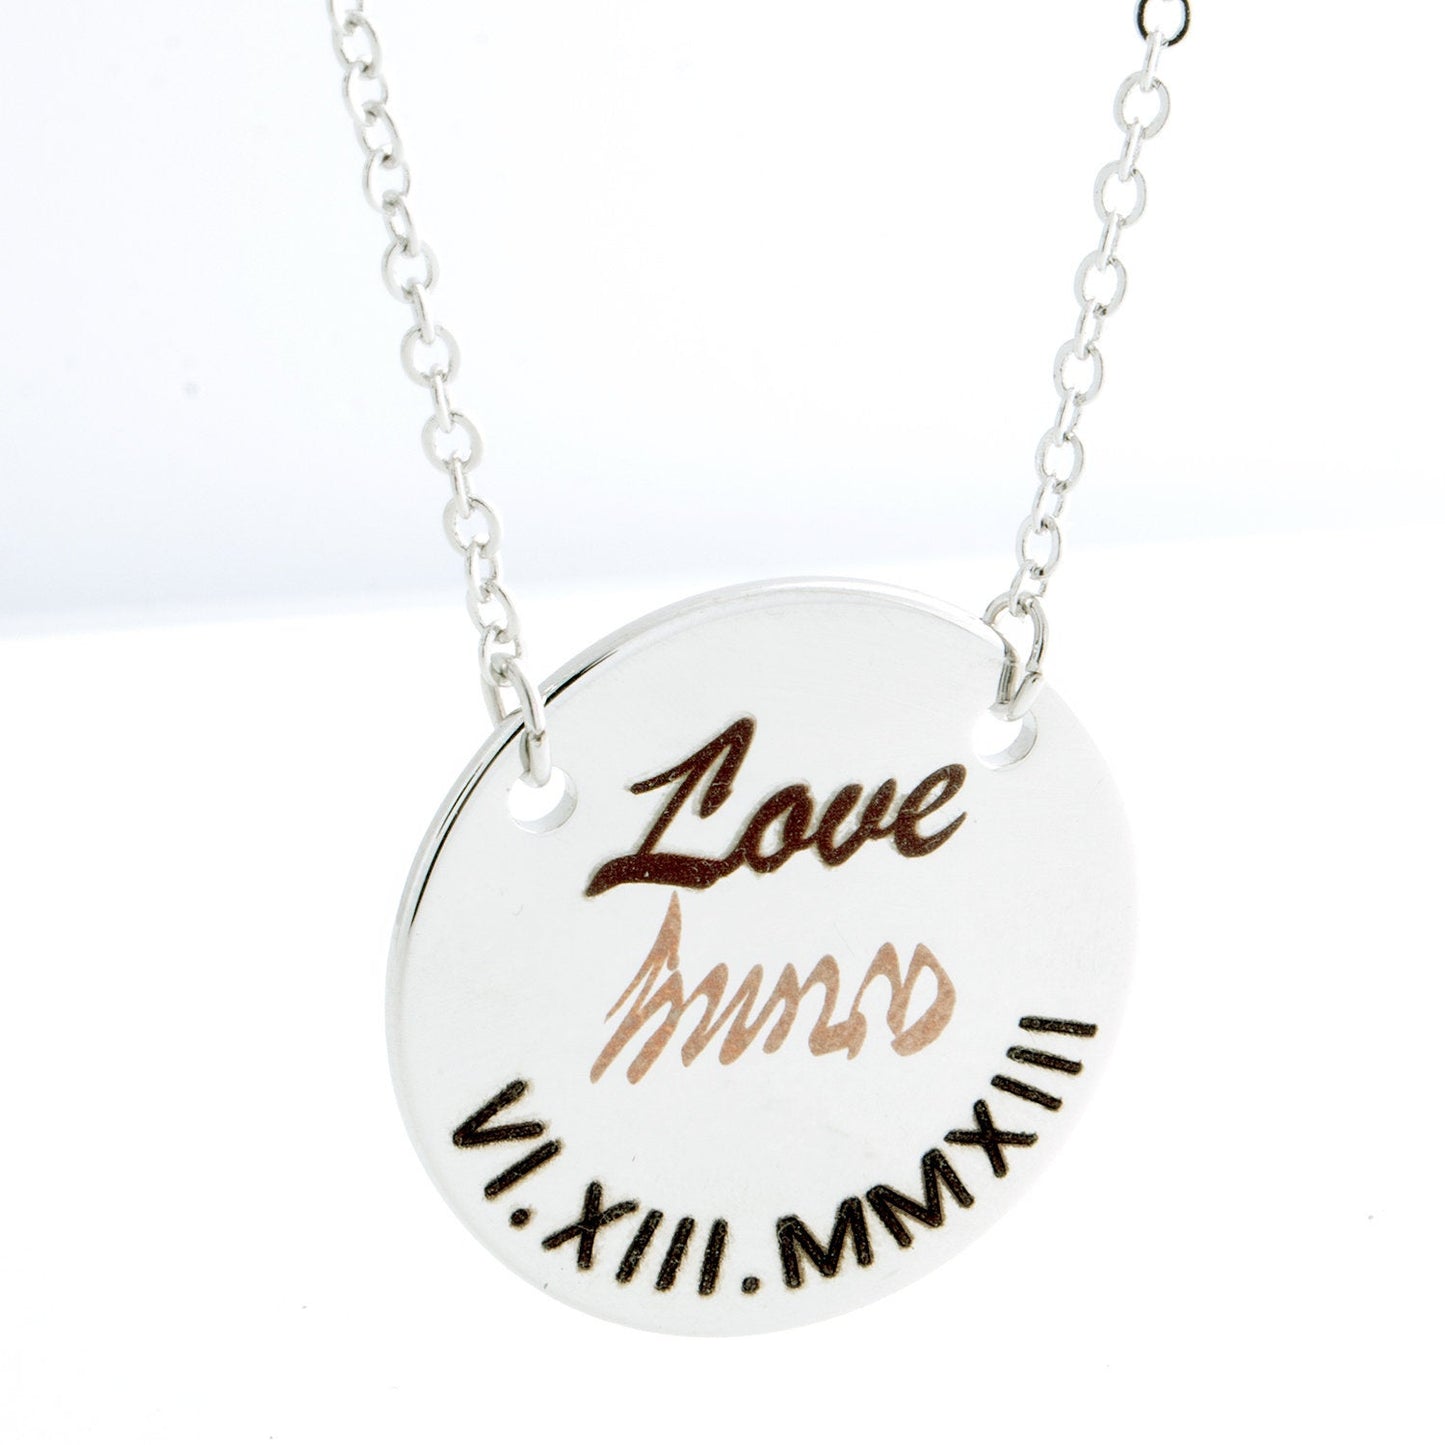 BTS Necklace - Love=Army fan necklace